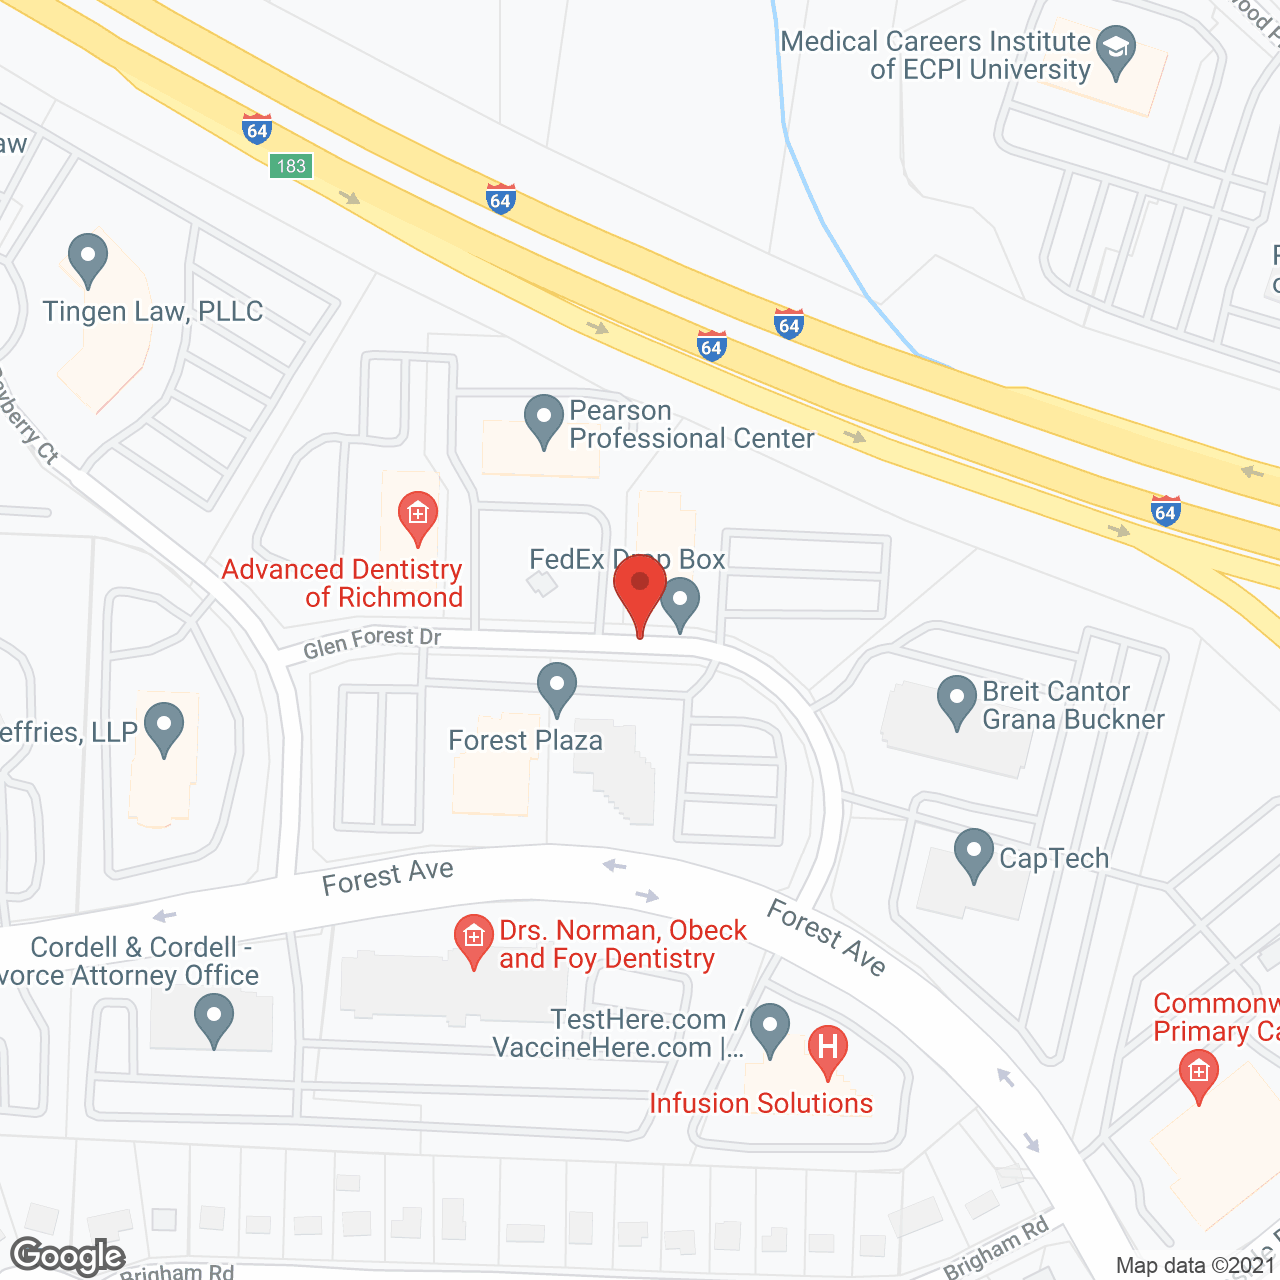 BrightStar Care of Richmond, VA in google map